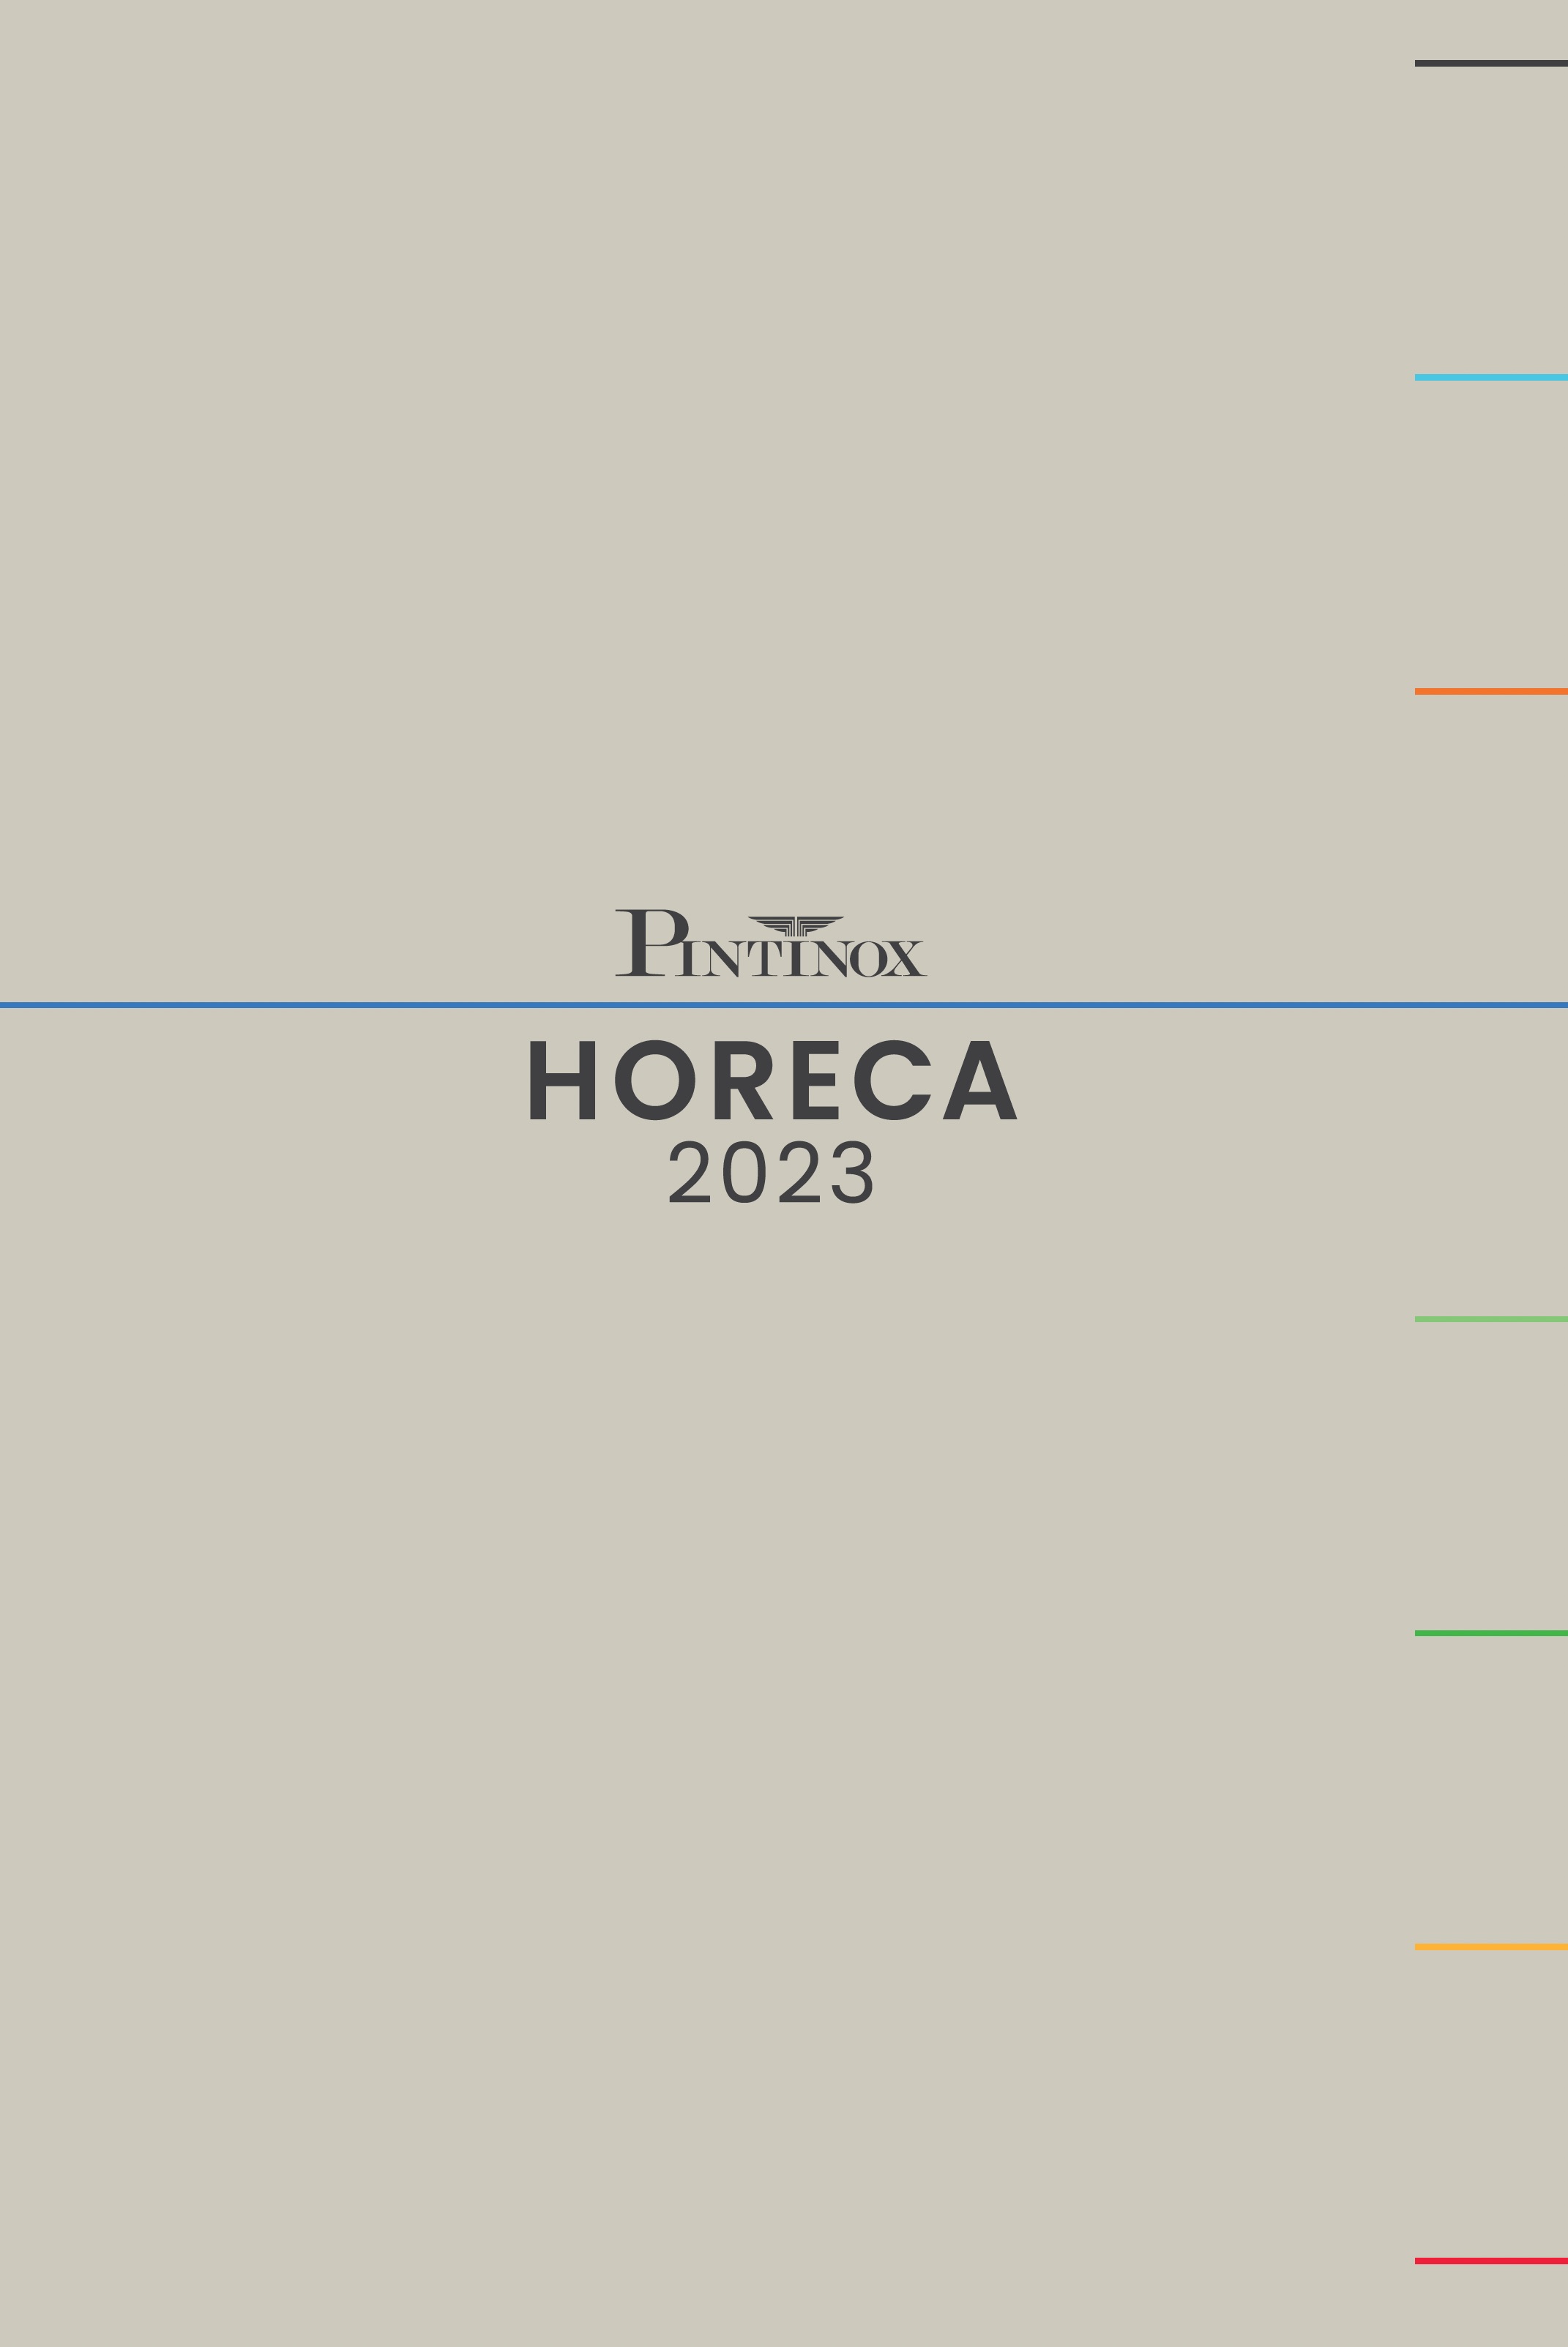 Pintinox  HORECA Katalog PDF